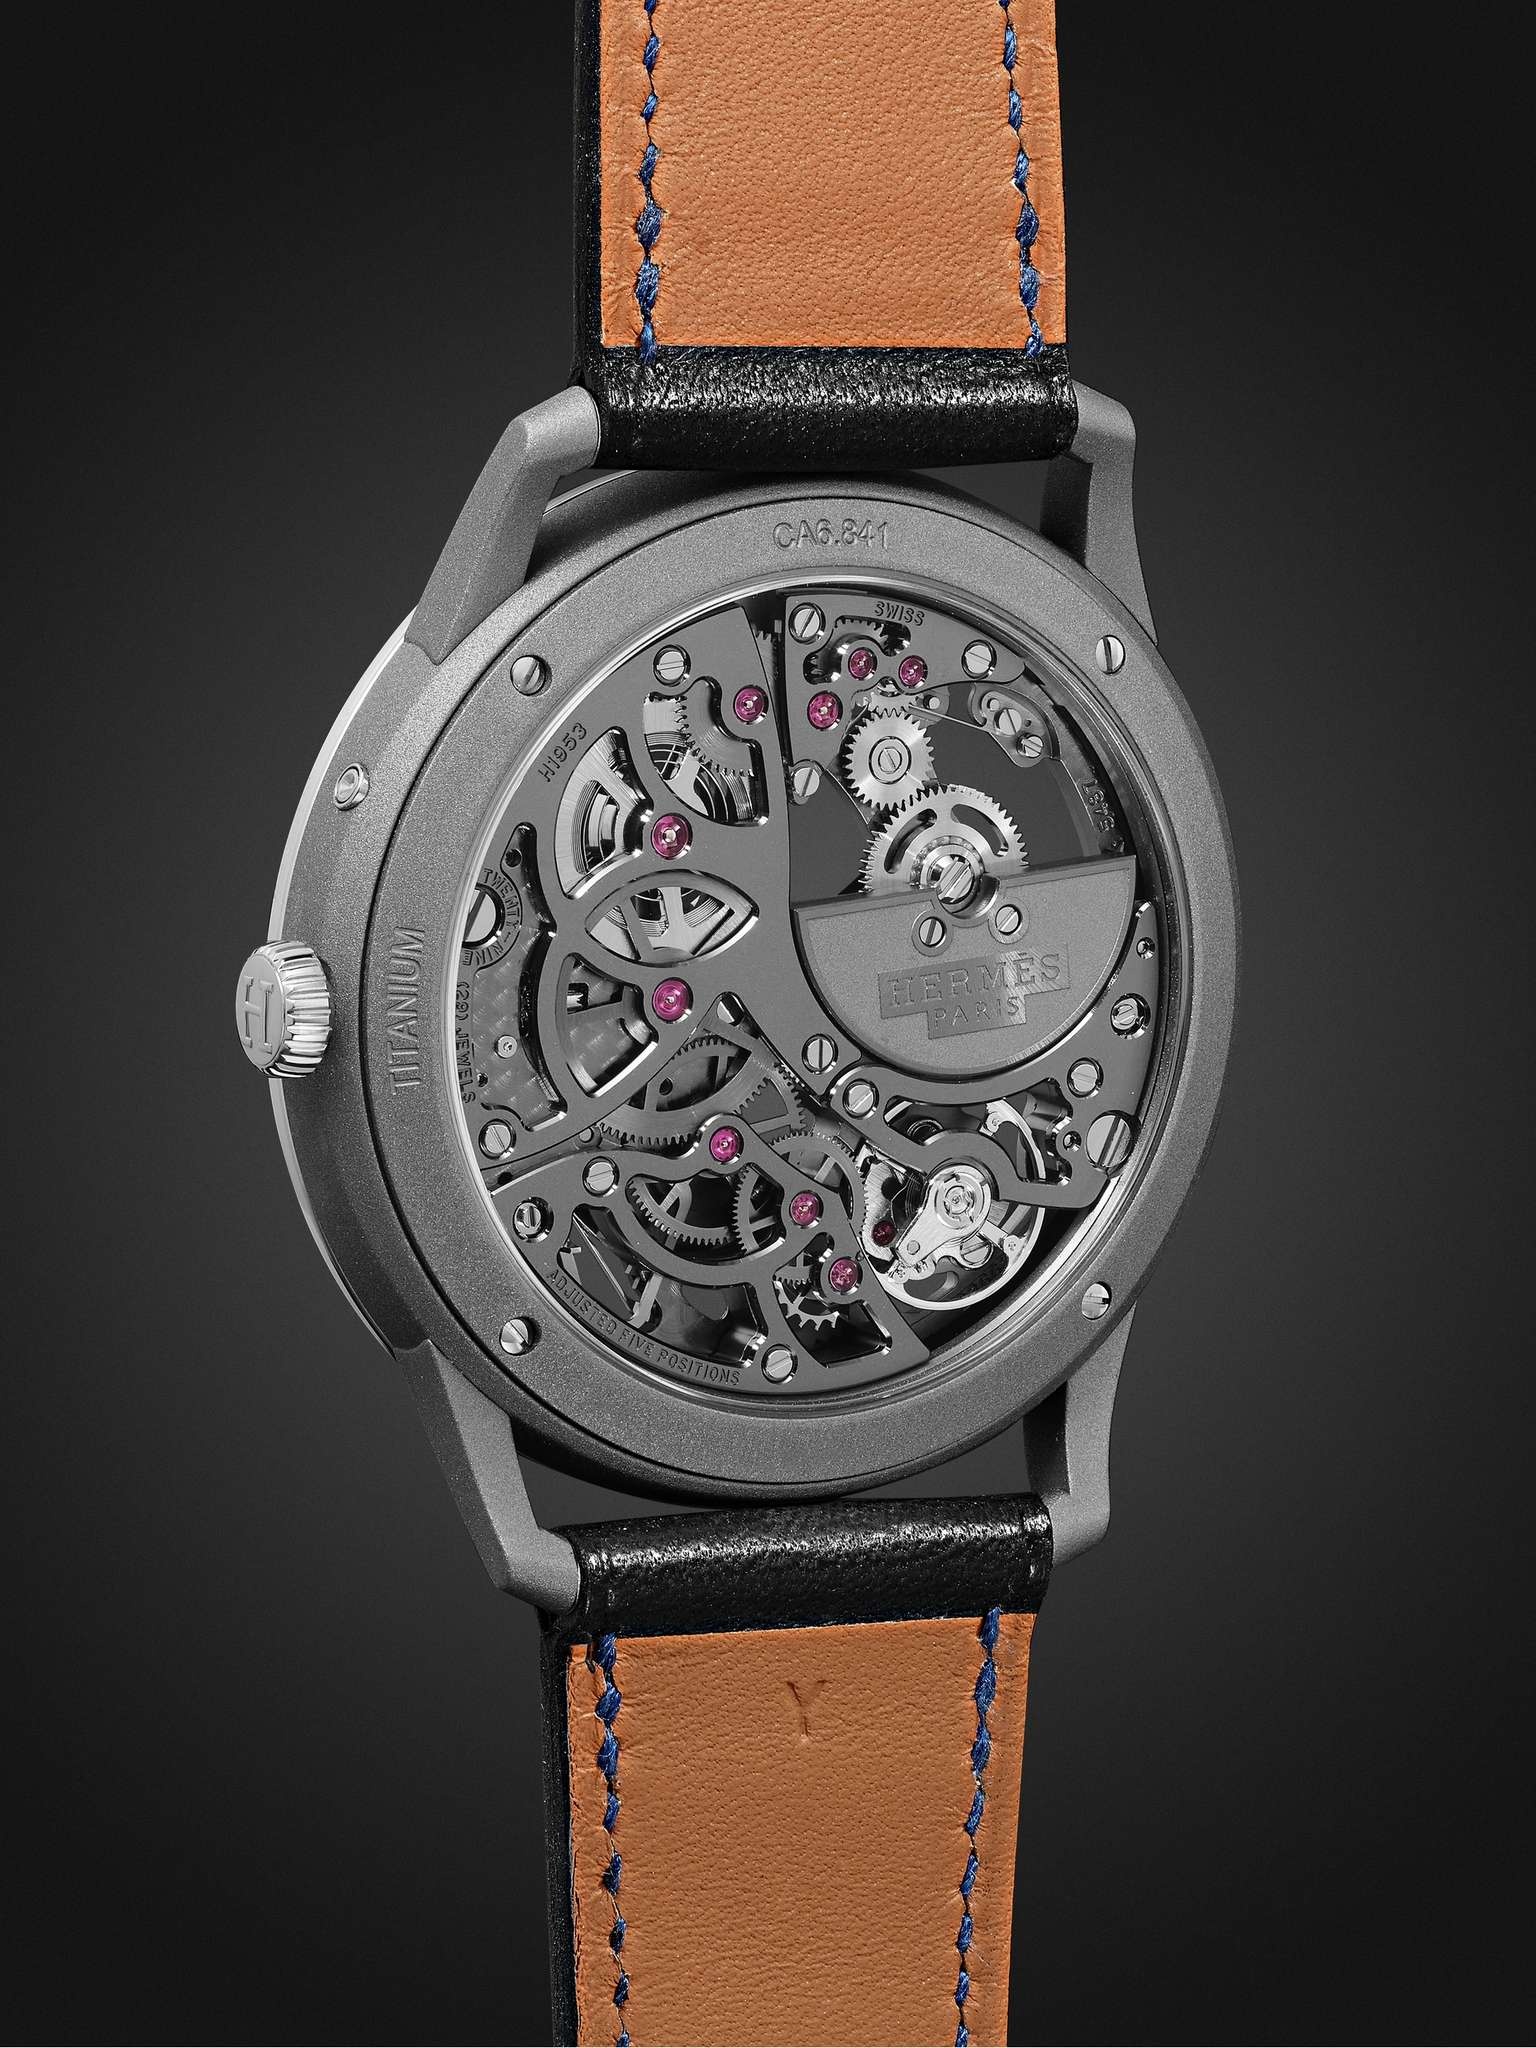 Slim d'Hermès Squelette Lune 39.5mm Automatic Titanium and Leather Watch, Ref. No. 054695WW00 - 5